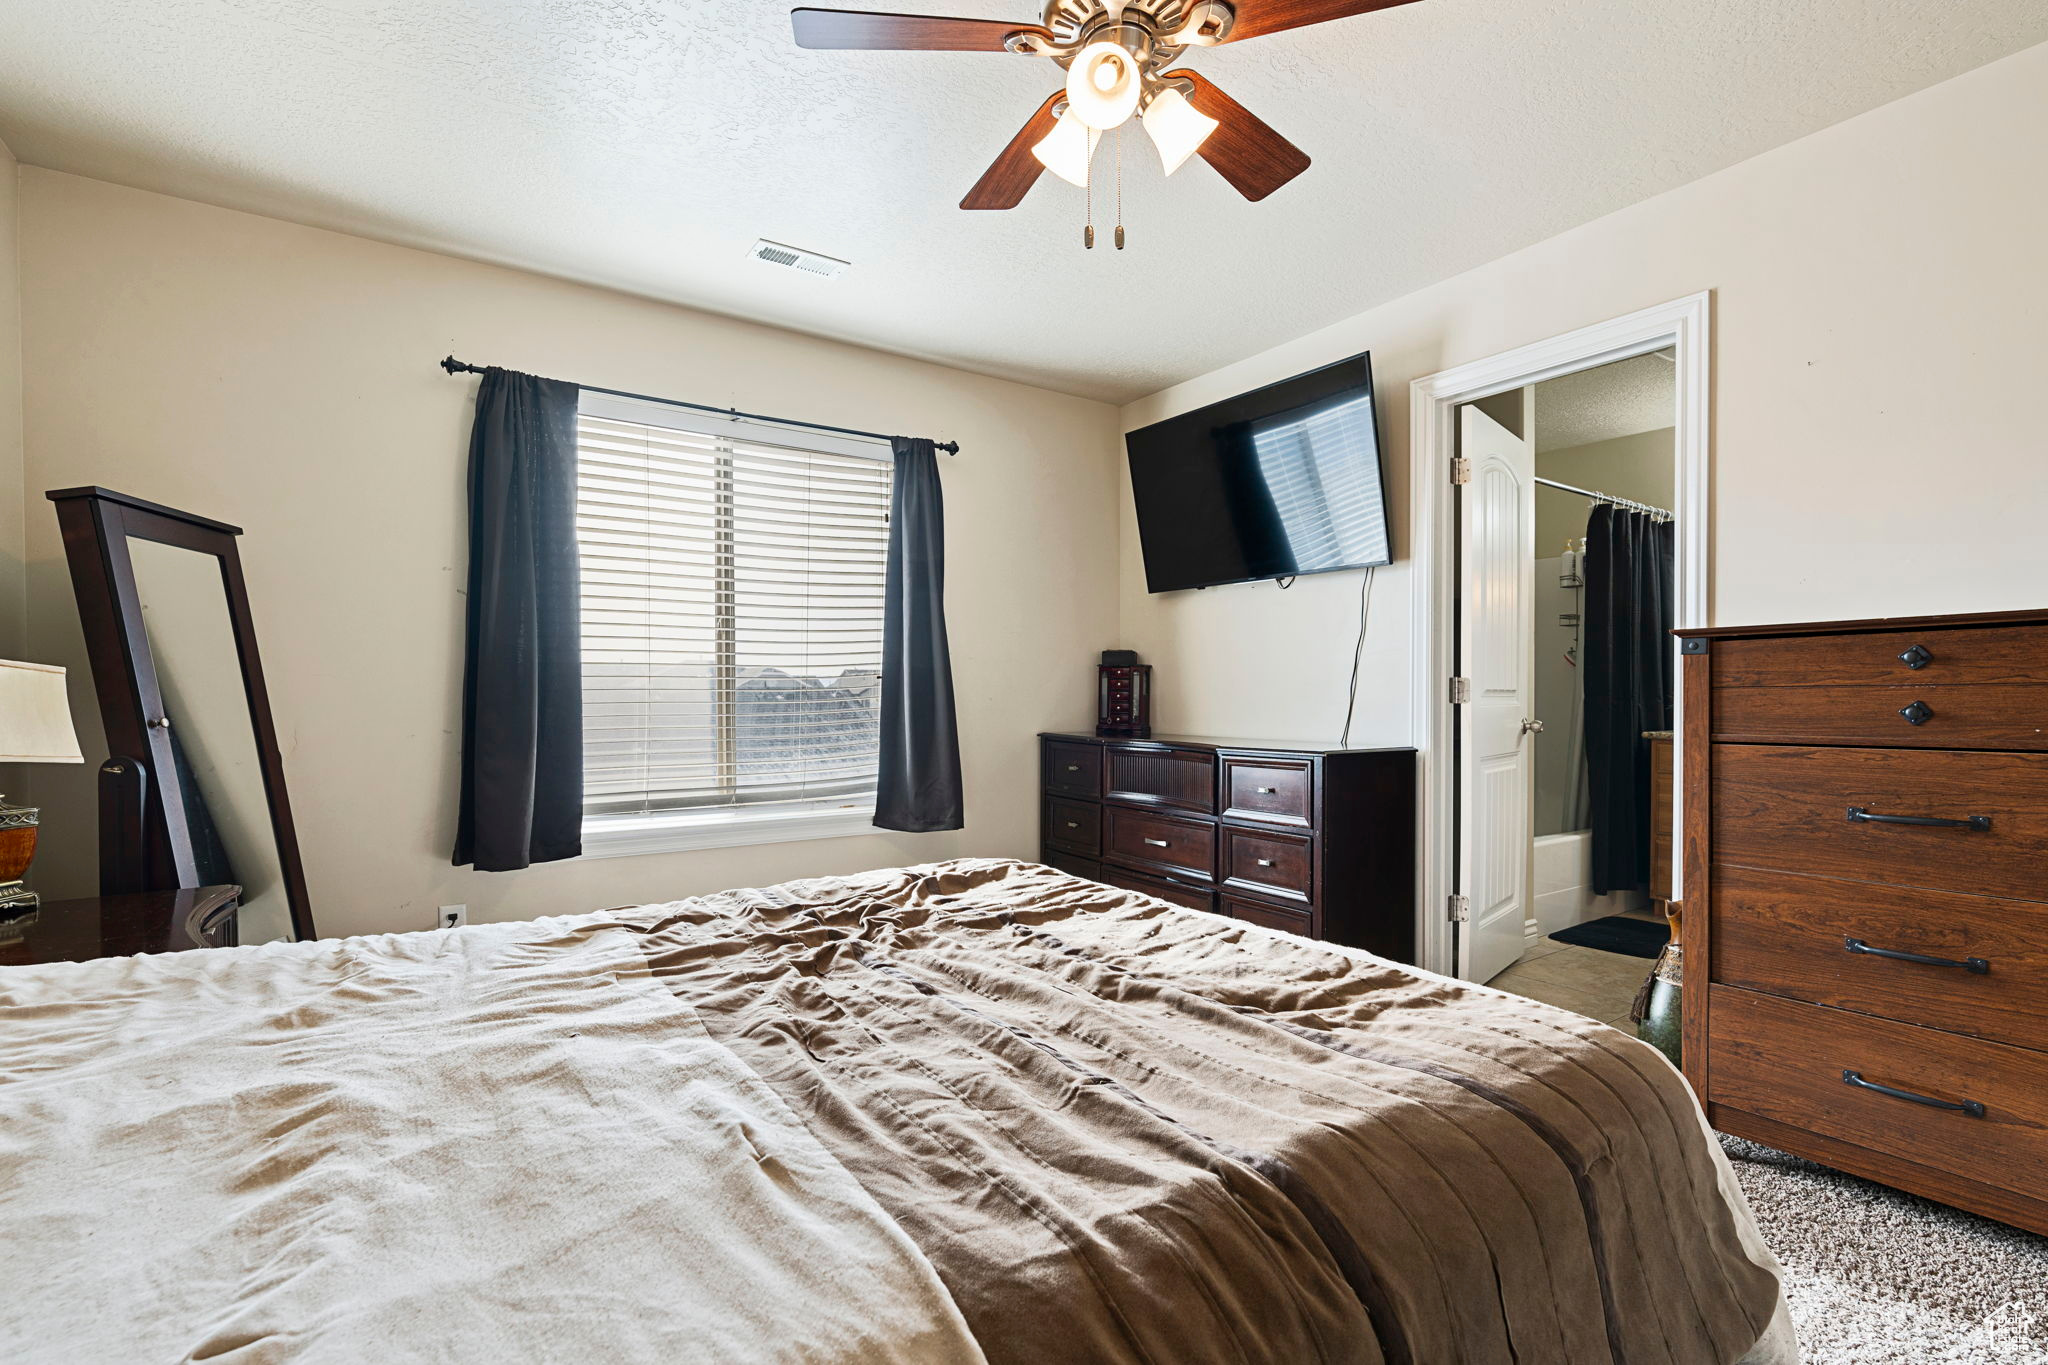 Bedroom with ceiling fan, a spacious closet, ensuite bath, light colored carpet, and a closet